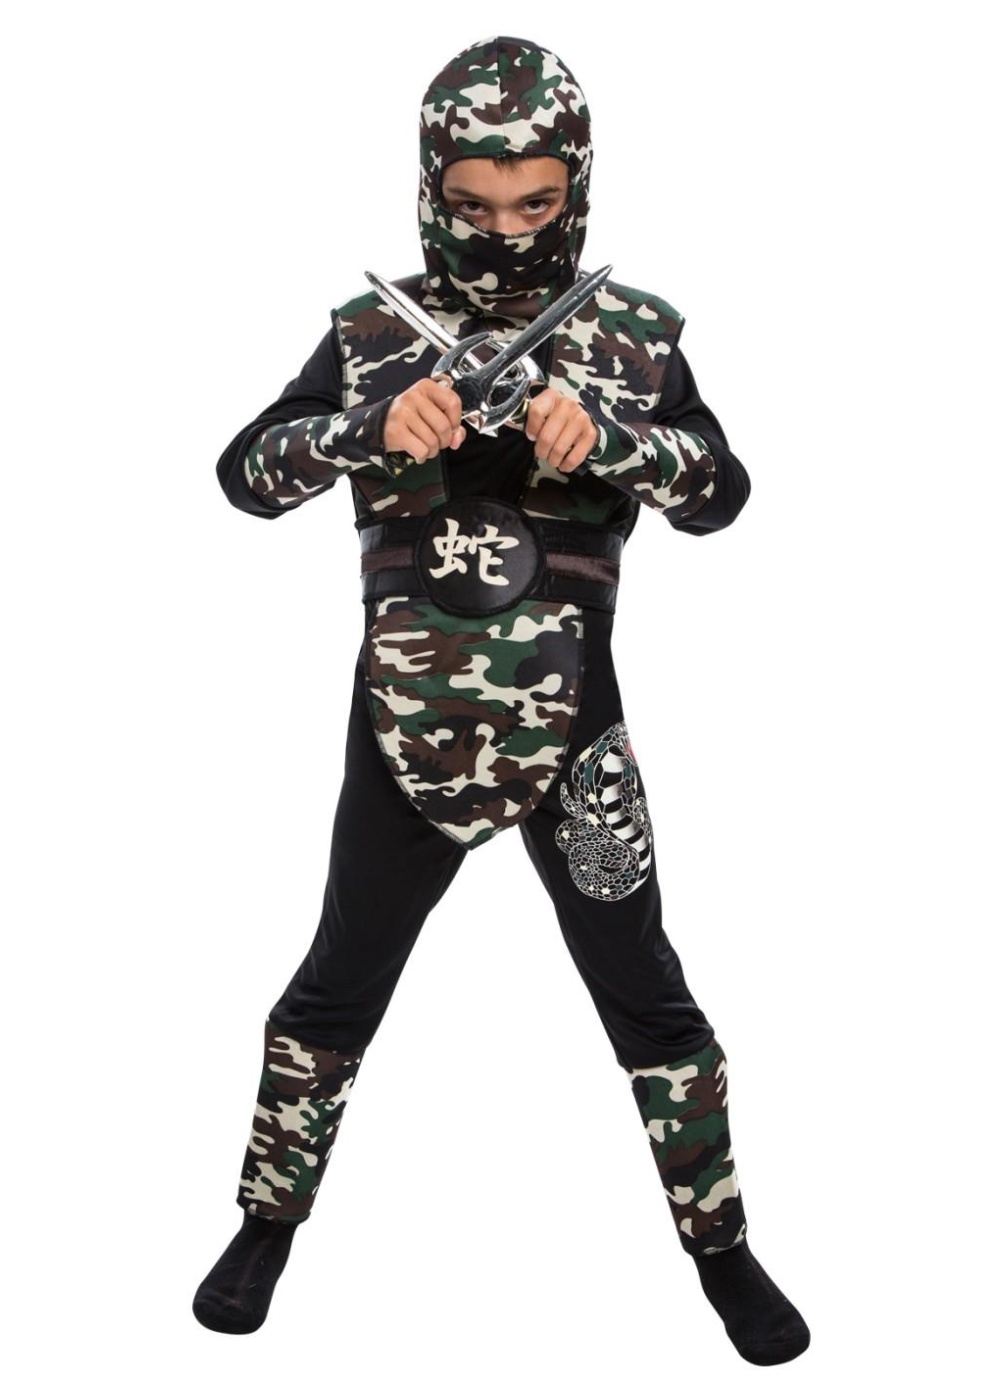  Boys Camouflage Ninja Costume